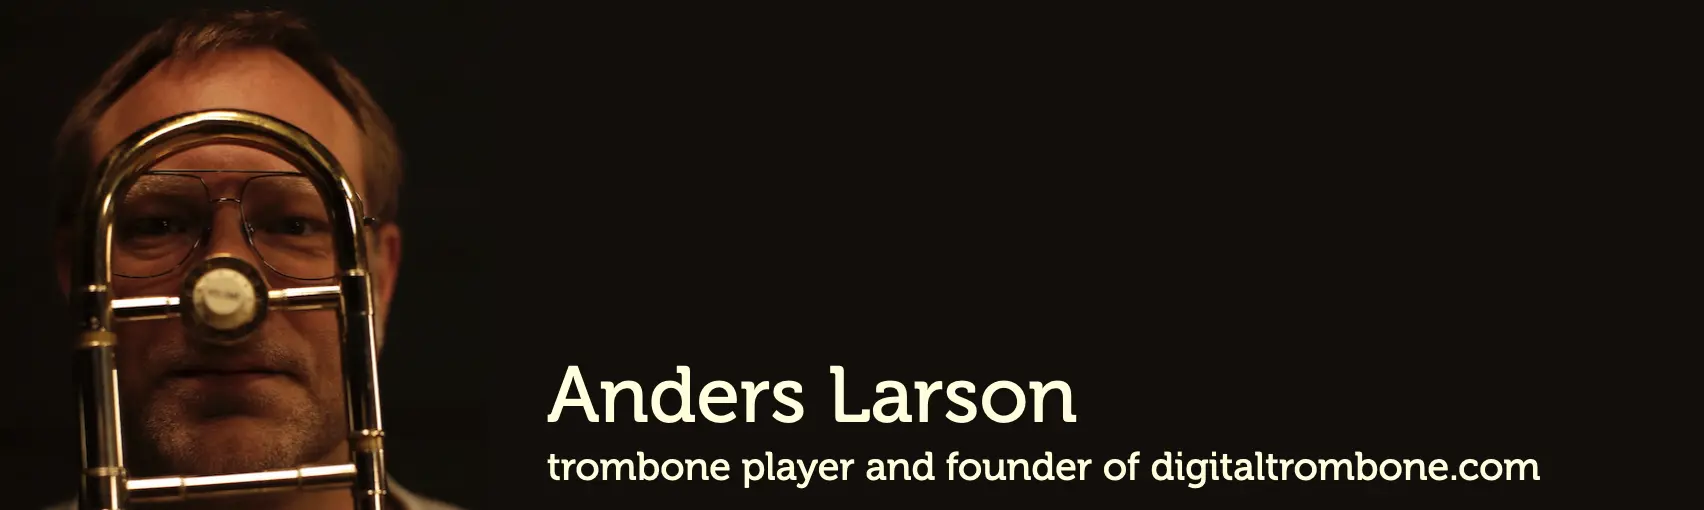 Jazz trombone player Anders Larson